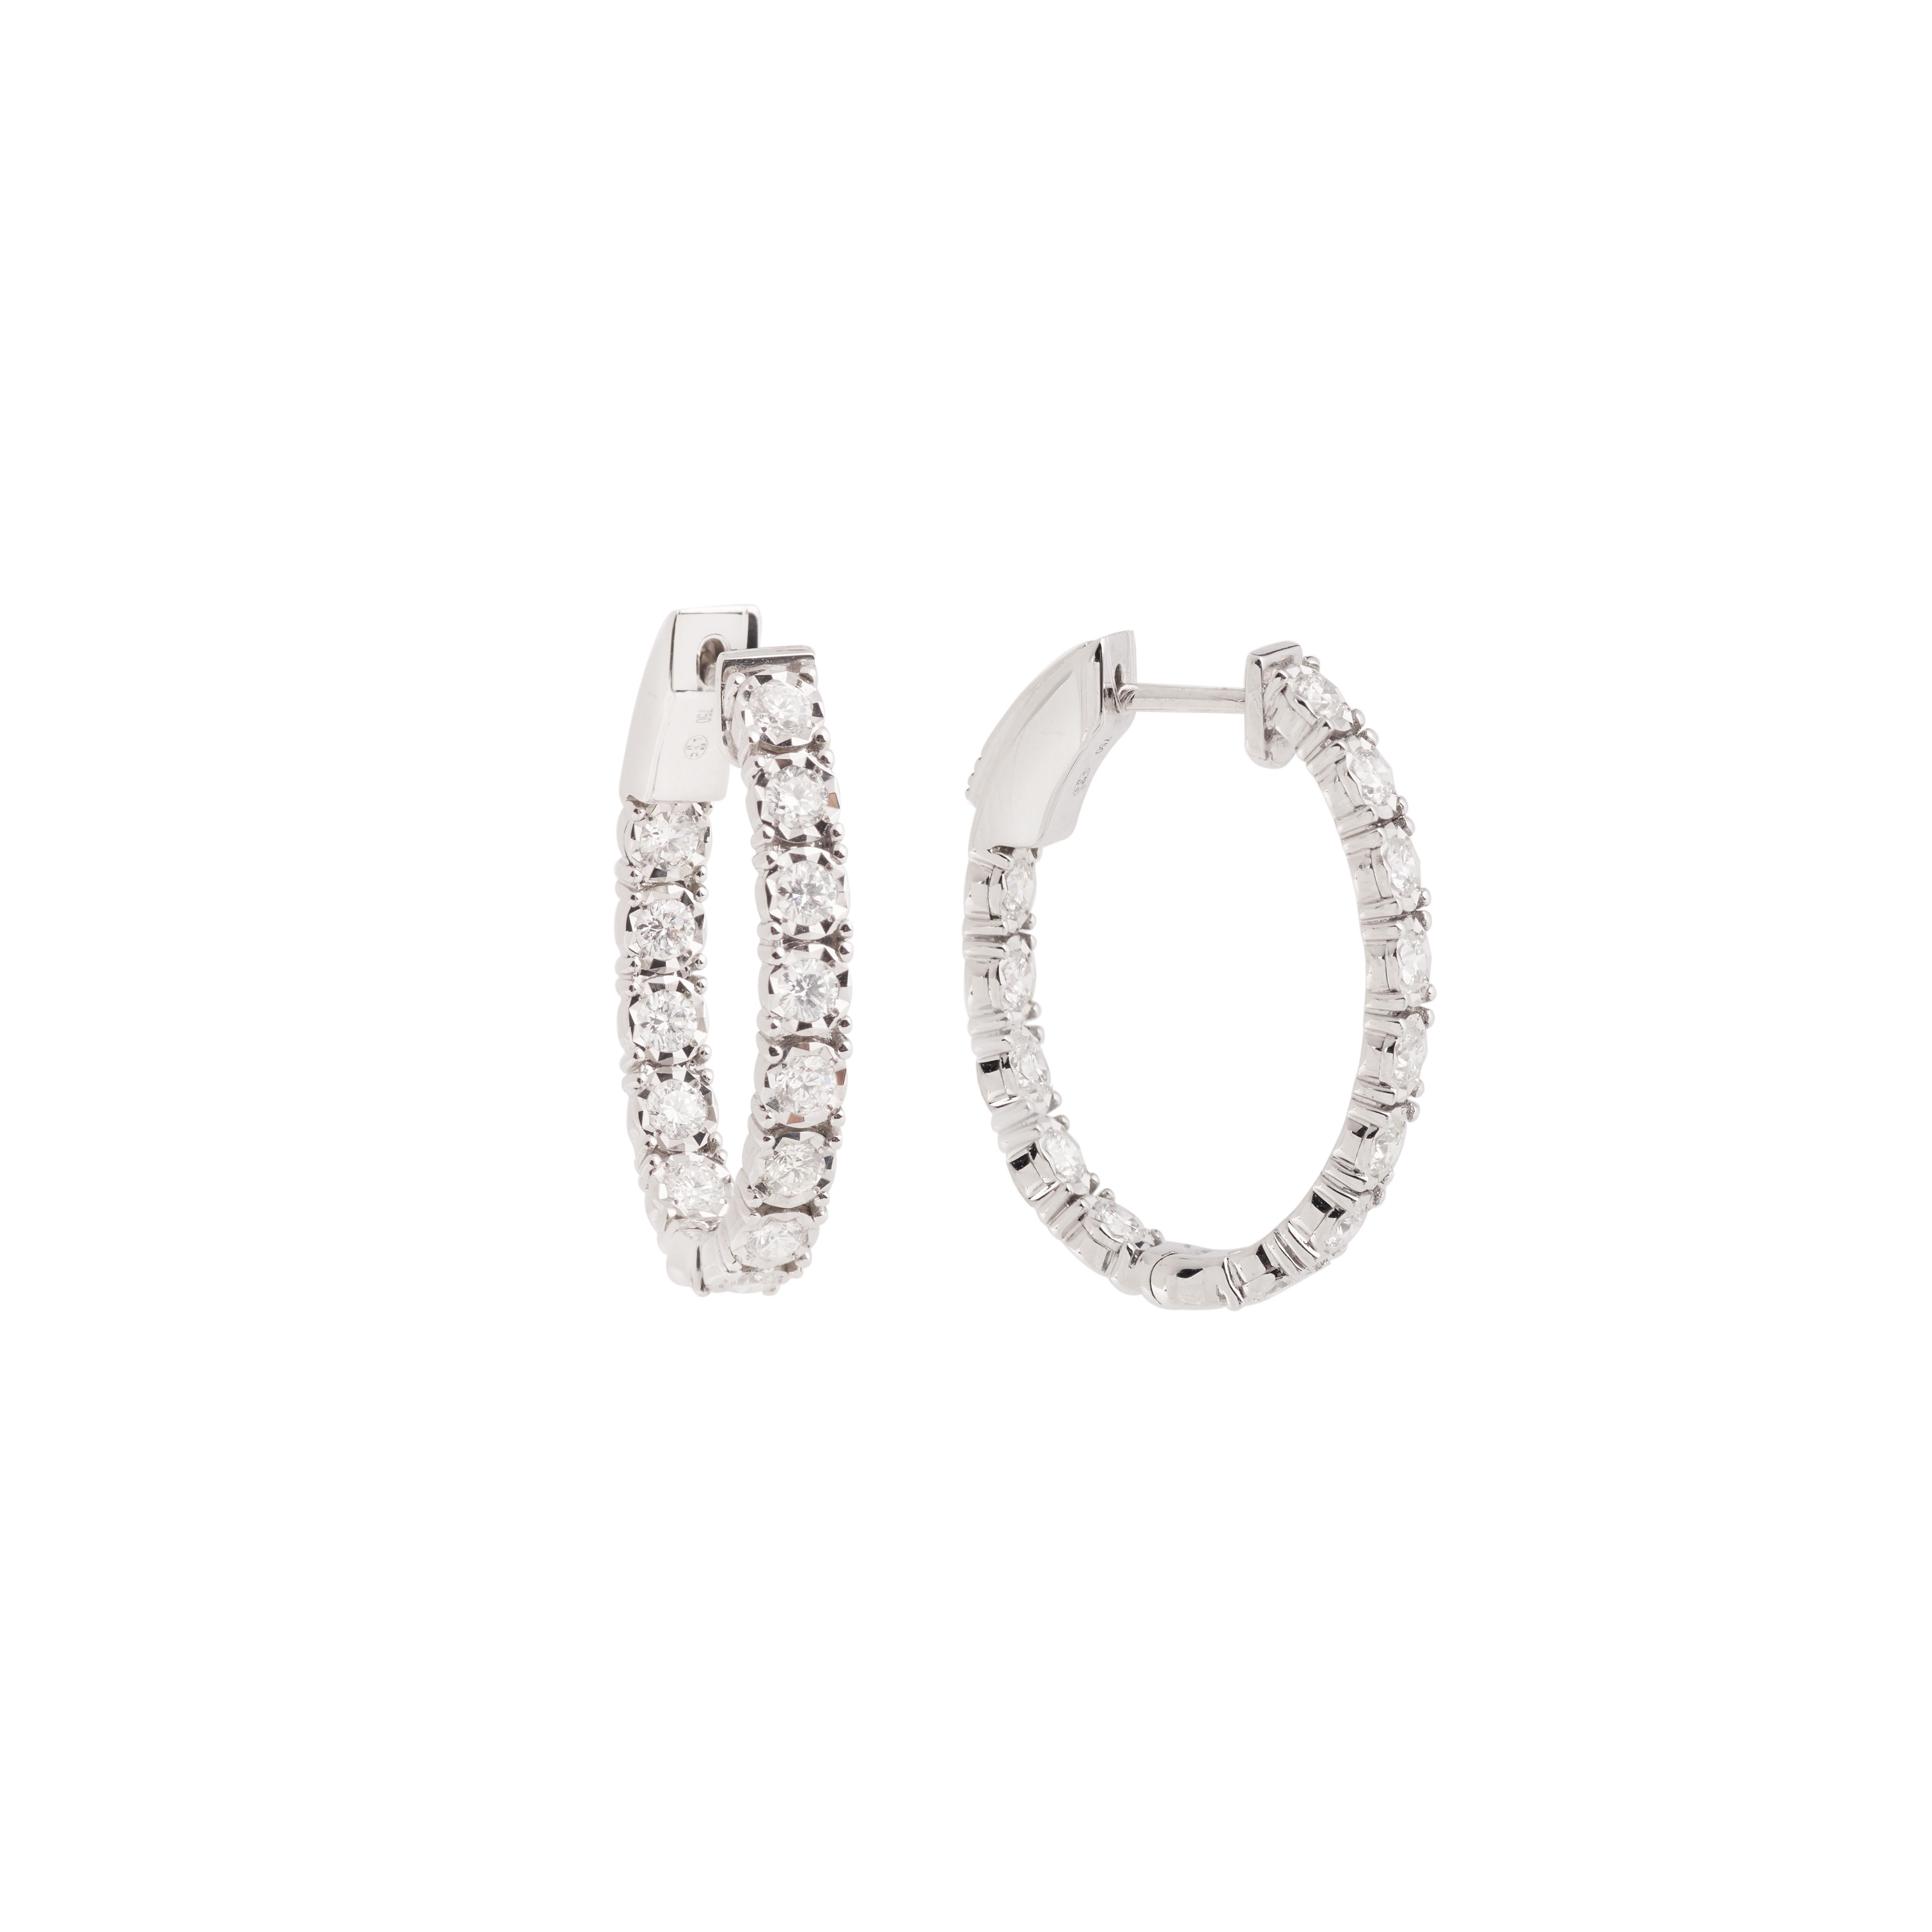 Elegant pair of creoles (Hoop earrings) in white gold set with brilliant-cut diamonds.

Secured clasp.

Total weight of diamonds: 1.06 carats

Total weight of the loops: 6.90 g

Dimensions: 2.55 x 1.90 X 0.37 cm (0.78 X 0.39 X 0.12 inch)

18 karat